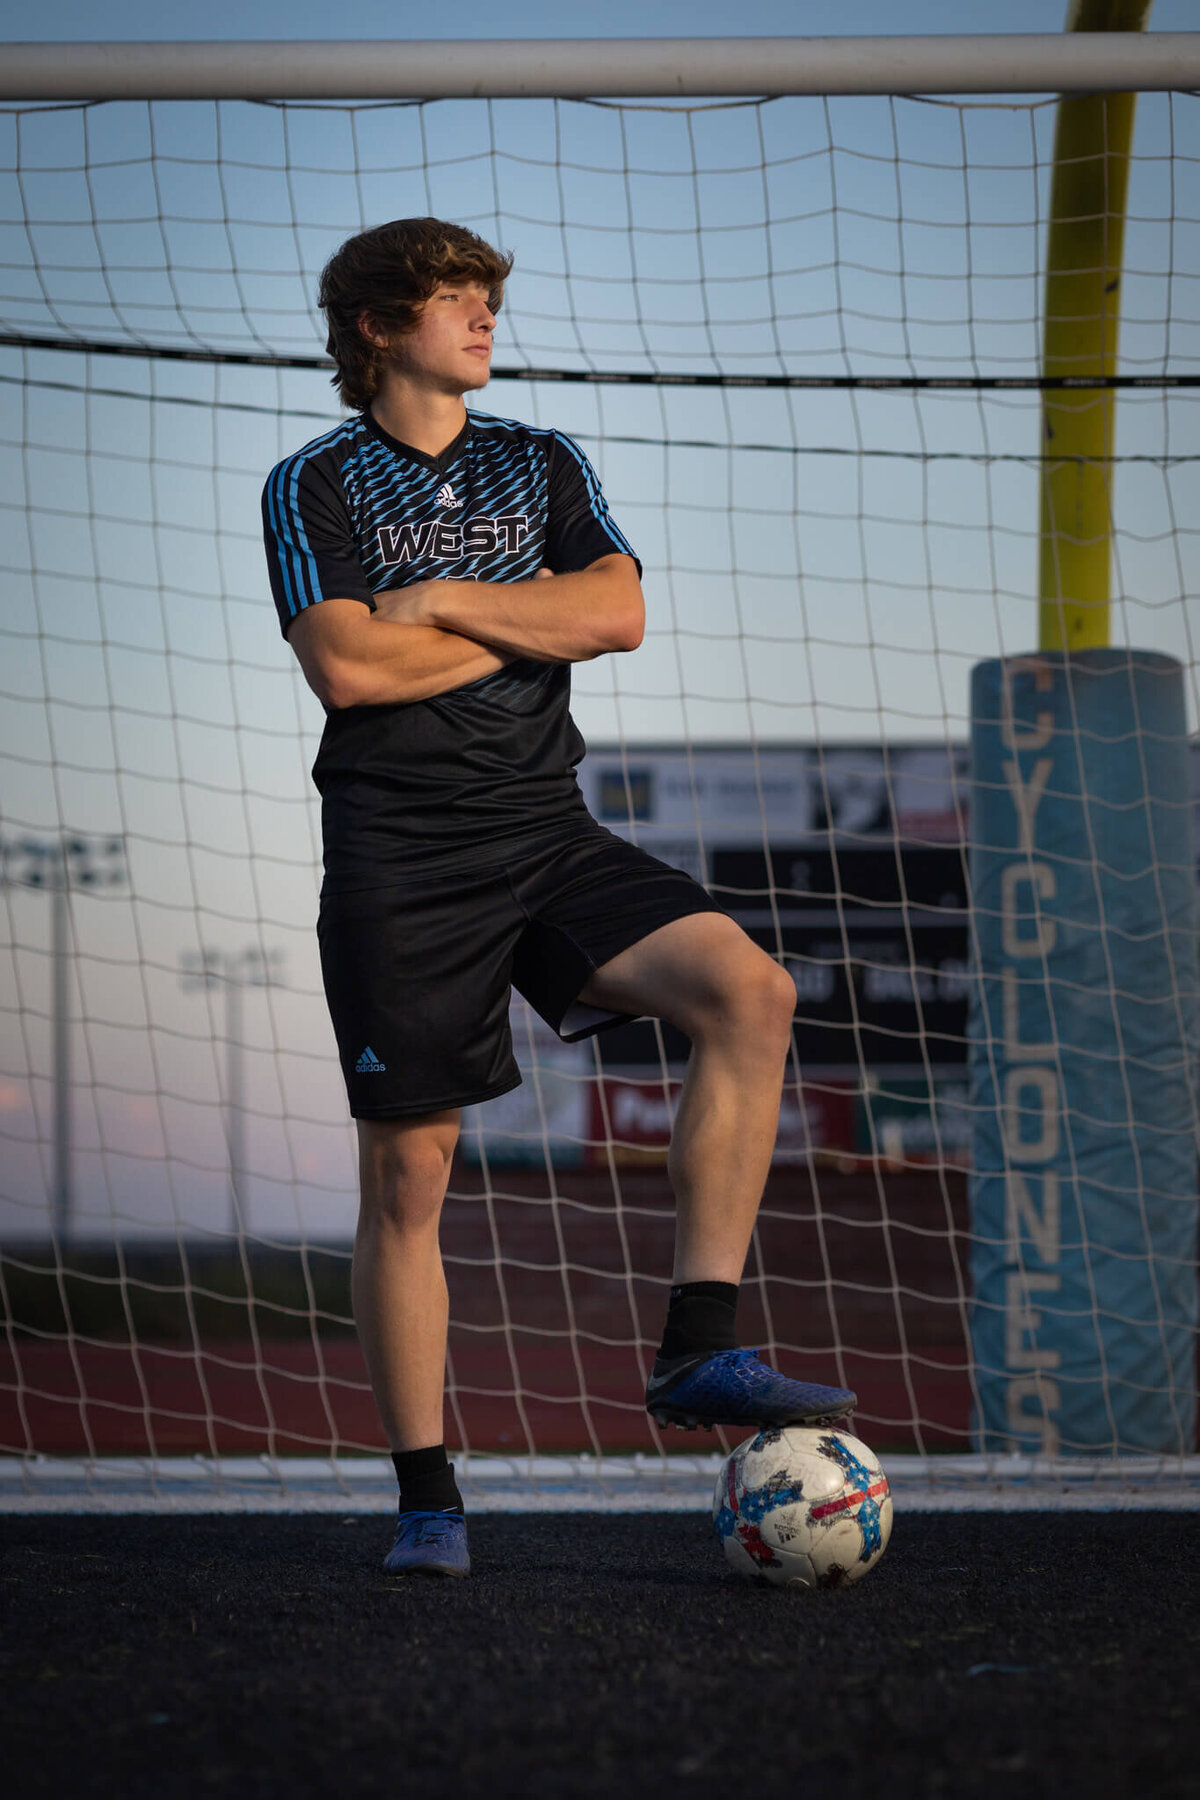 high school senior boy wearing soccer uniform standing with soccer ball in a soccer net